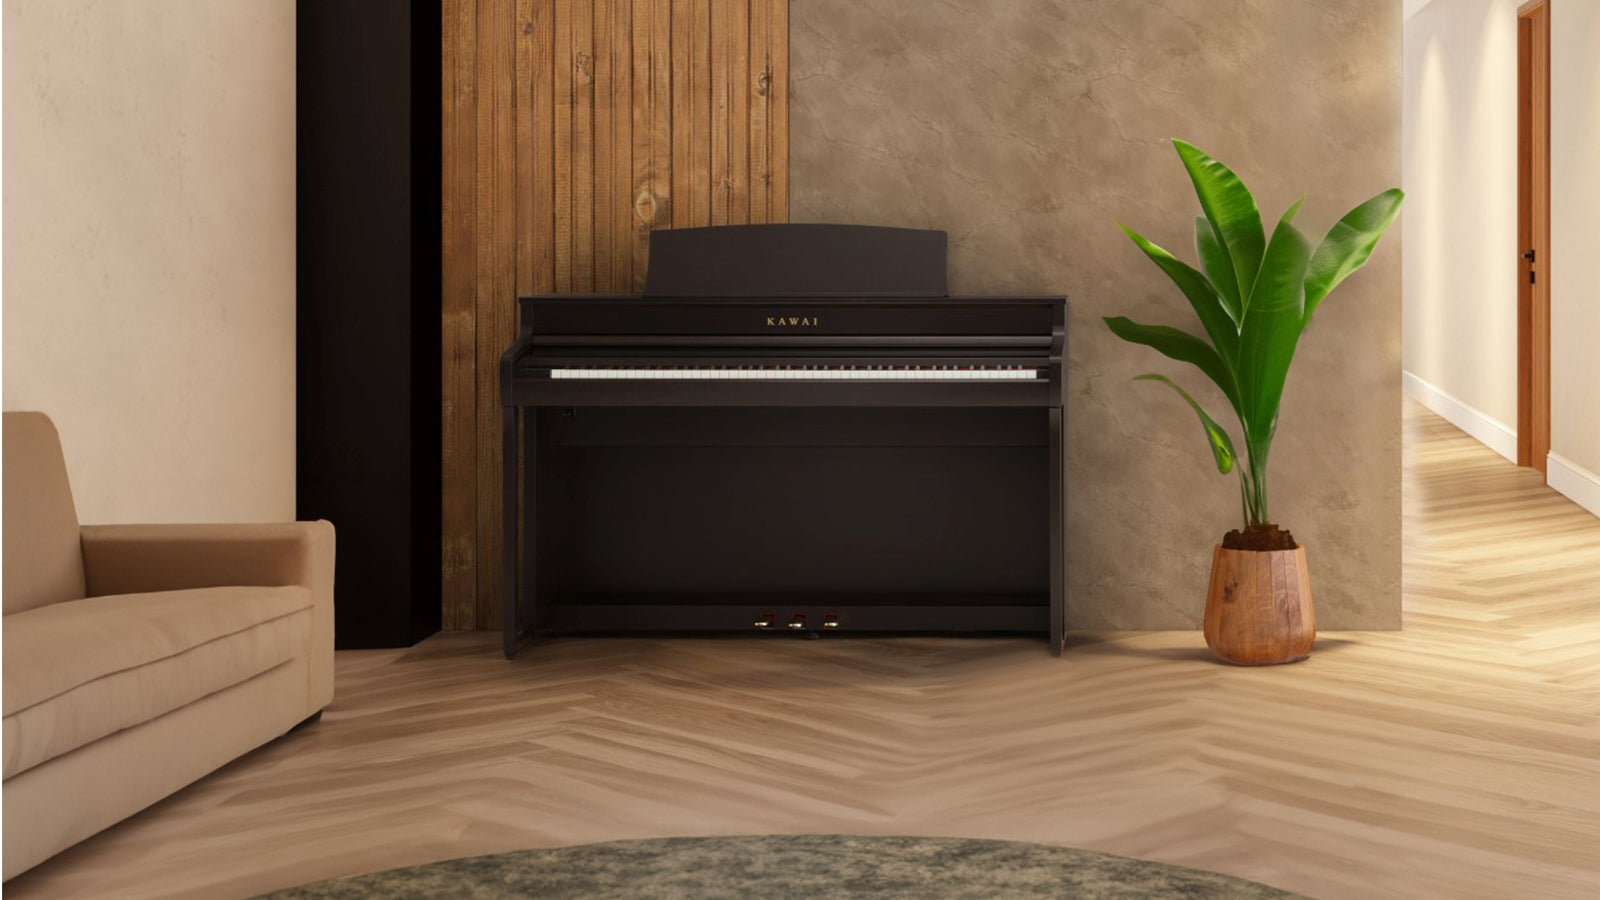 Kawai CA digital piano in a stylish living space